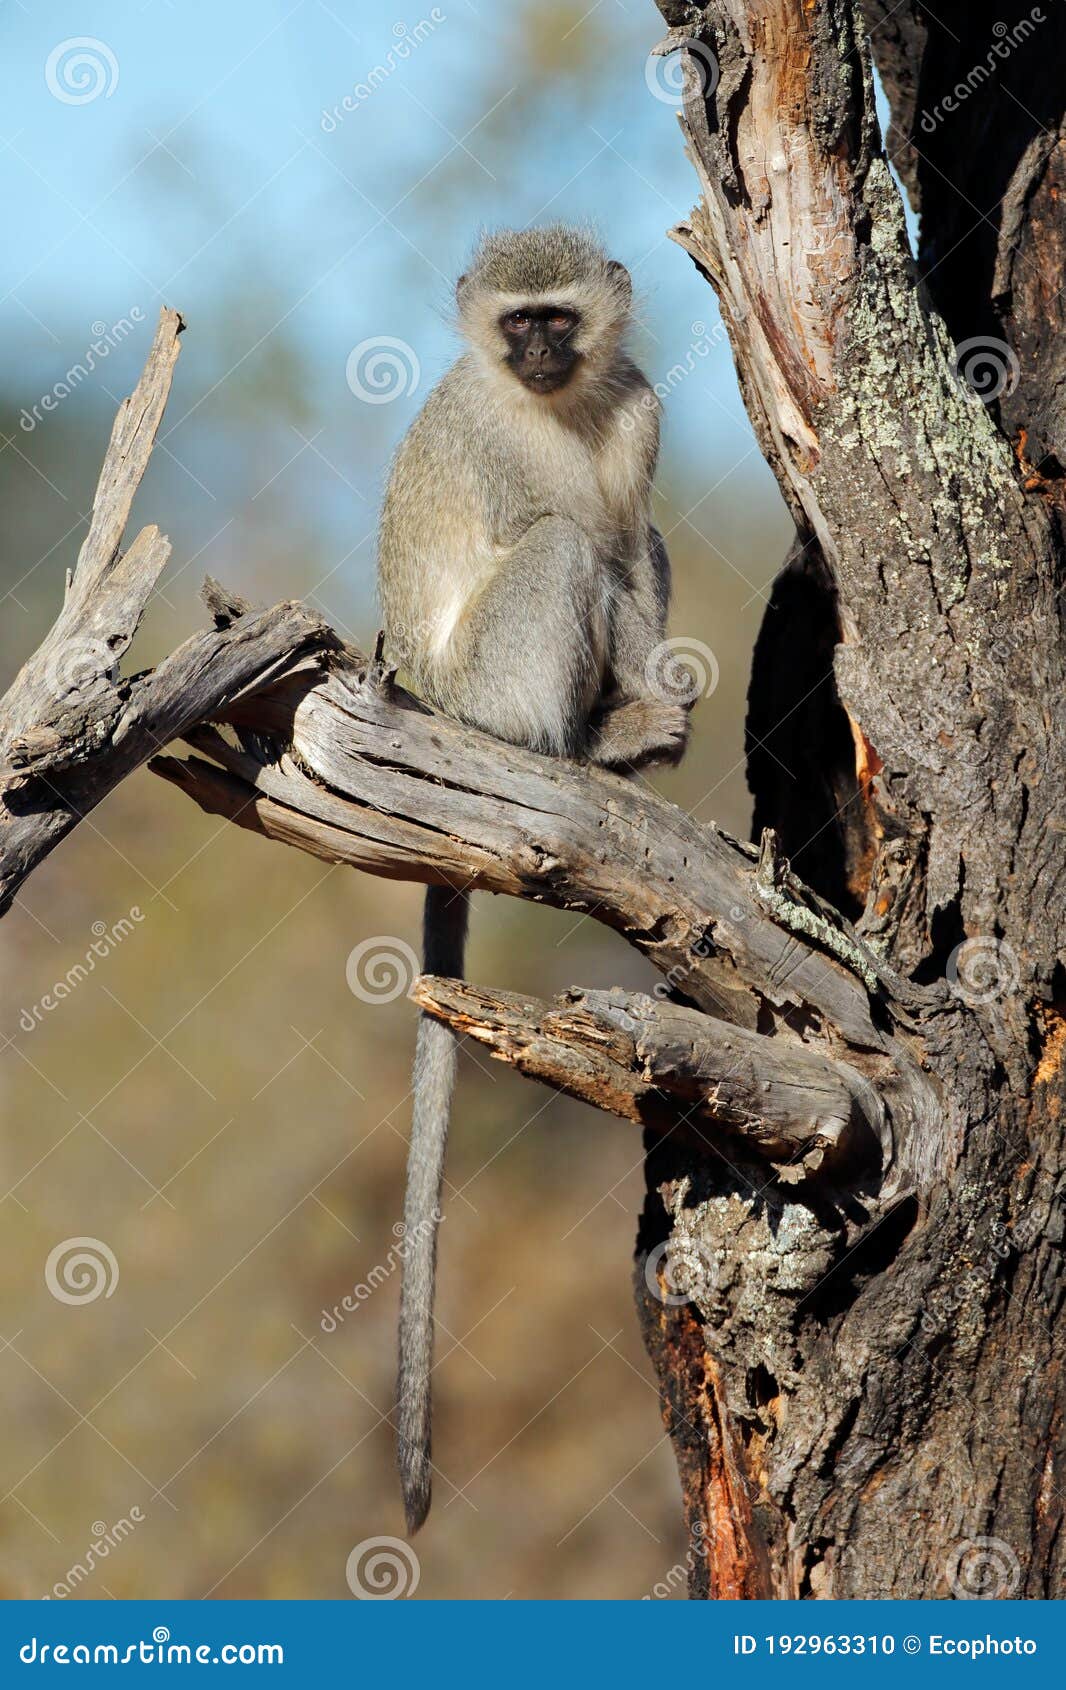 vervet monkey in a tree